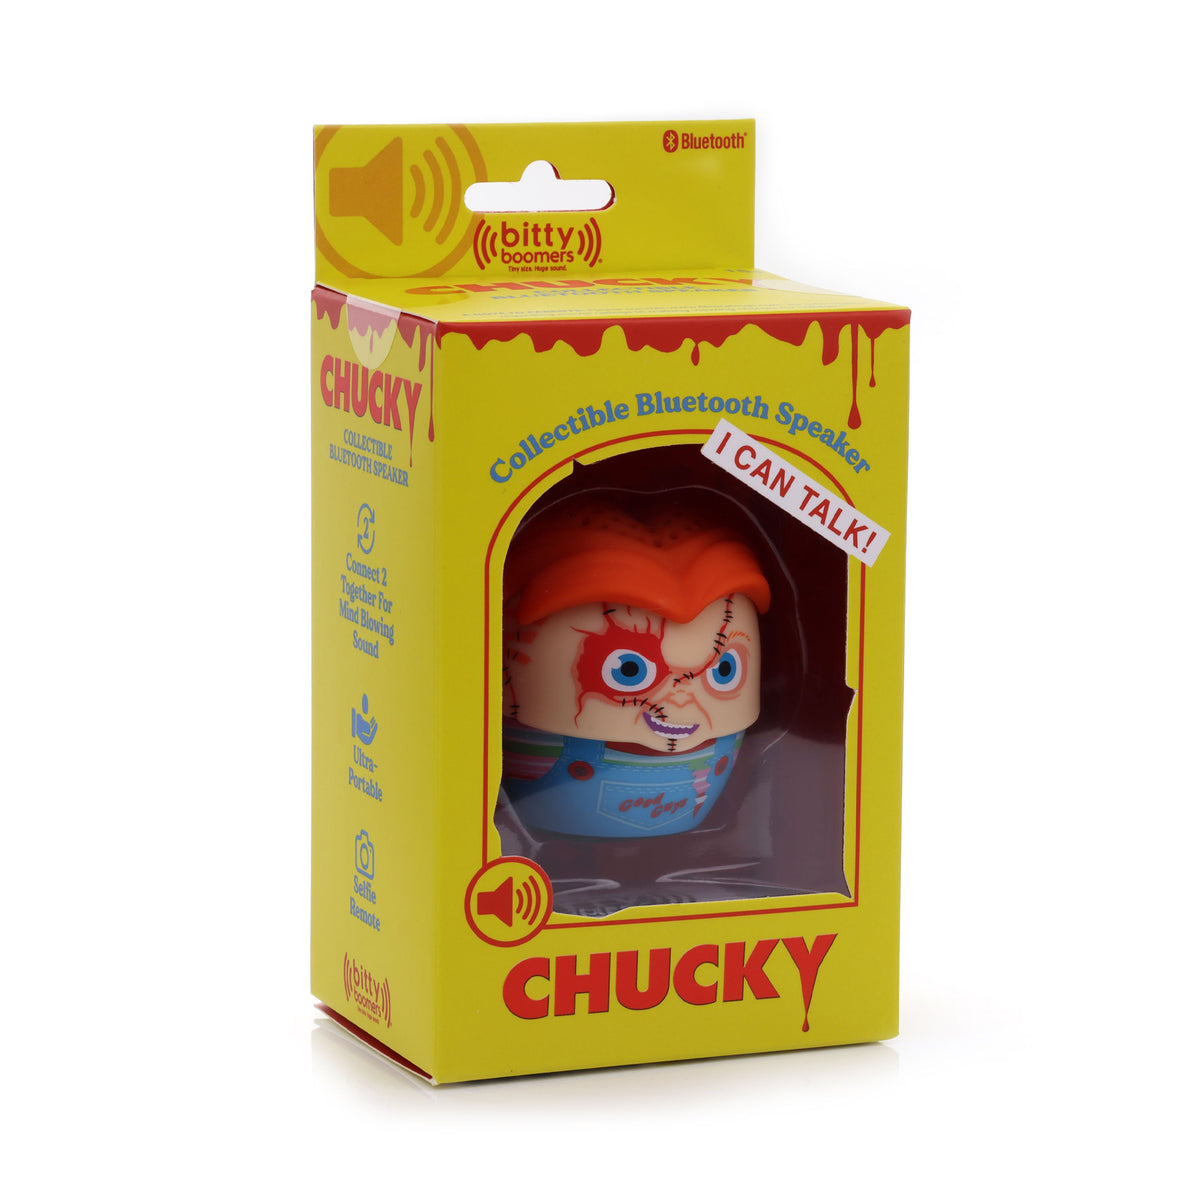 Chucky Wireless Bluetooth Speaker